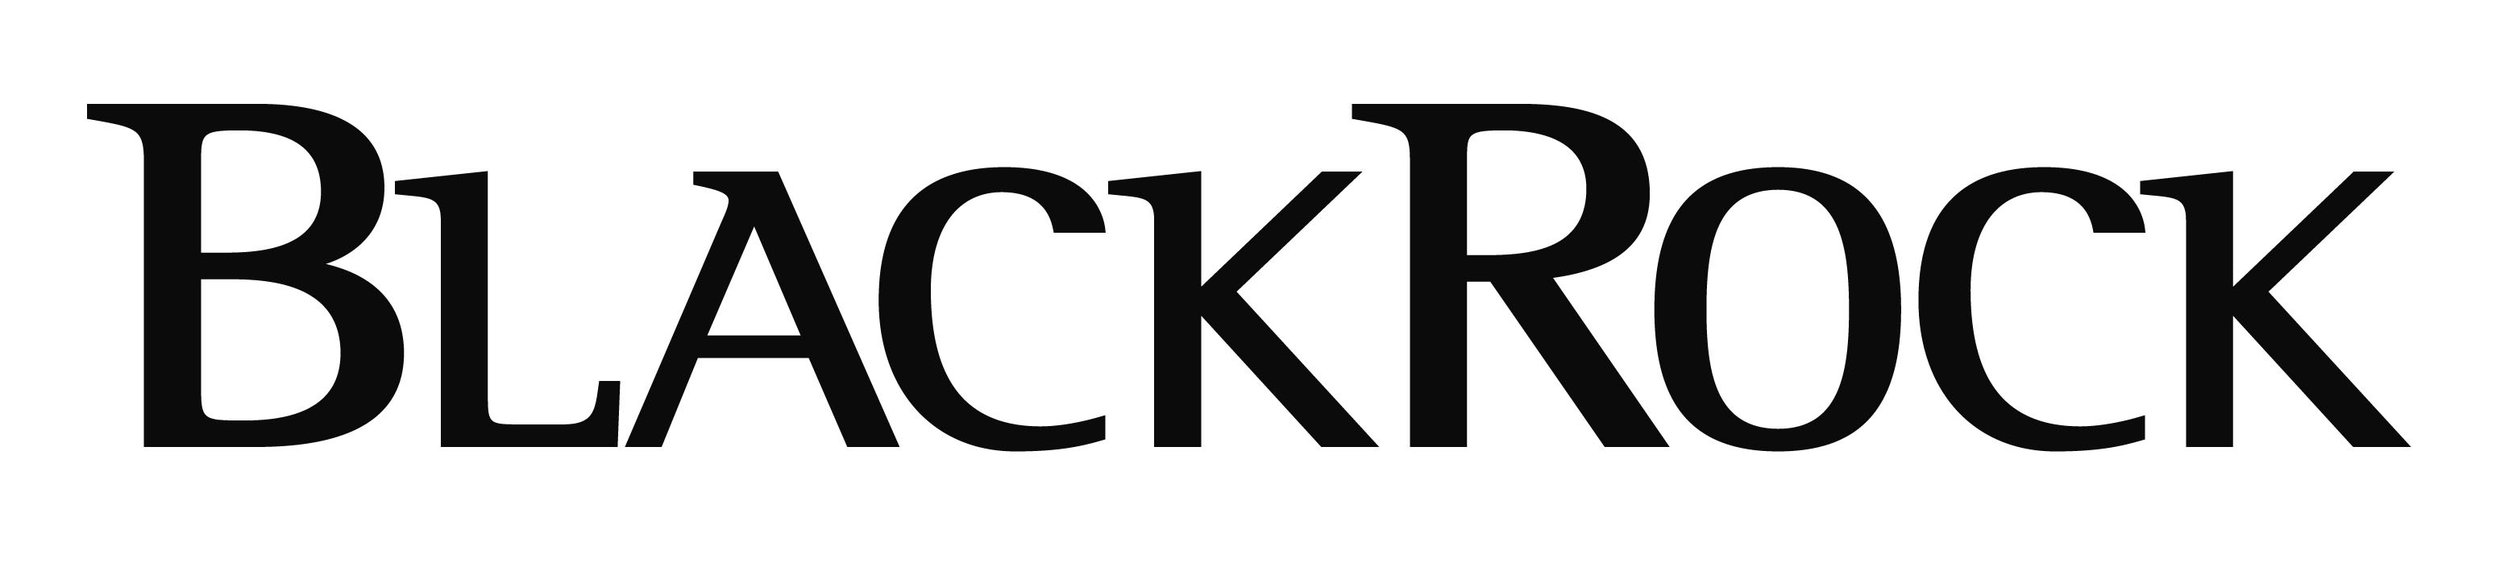 blackrock-logo.jpg